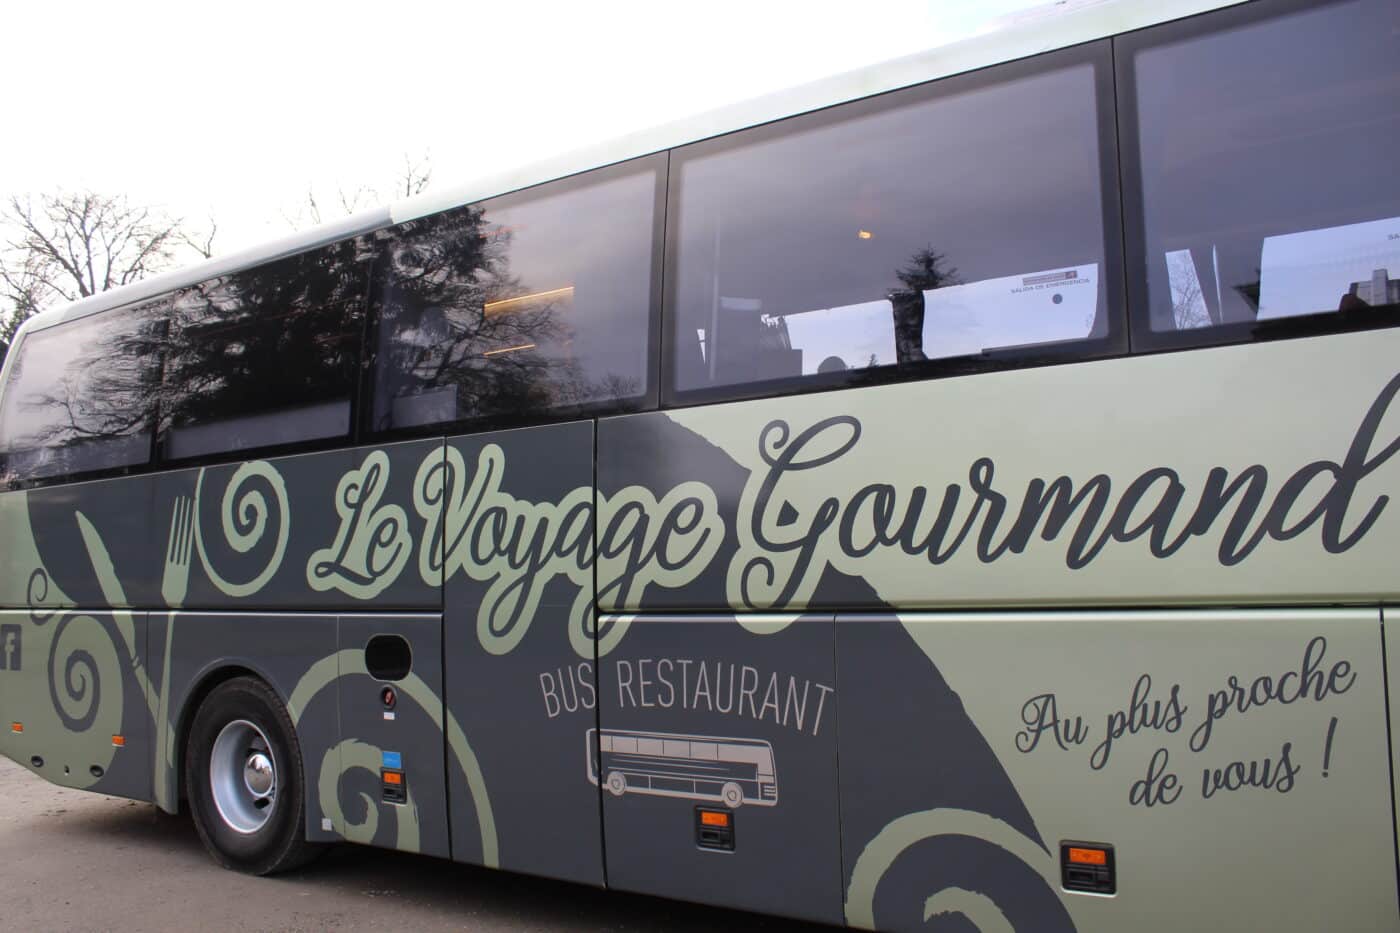 Ambassadeurs d'chénou - Marylise et Anthony - Le Voyage Gourmand, Bus restaurant